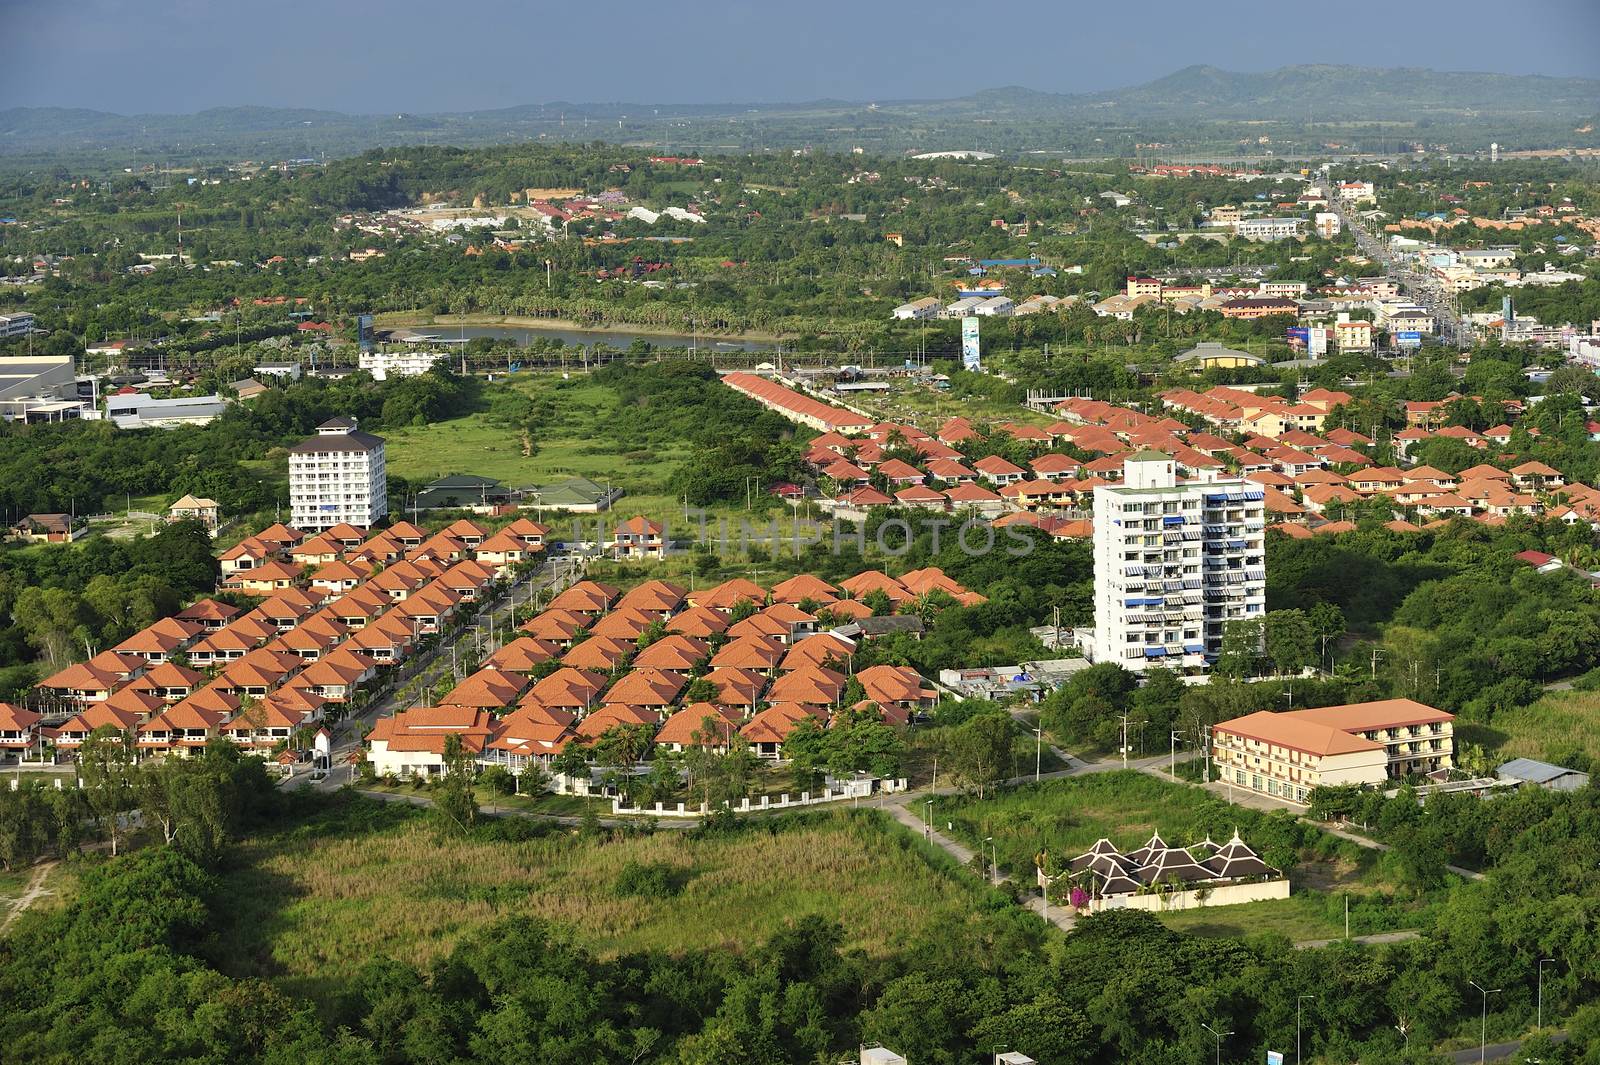 Aerial view of modern house complex, Jomtien Beach, Pattaya, Chonburi province, Thailand.